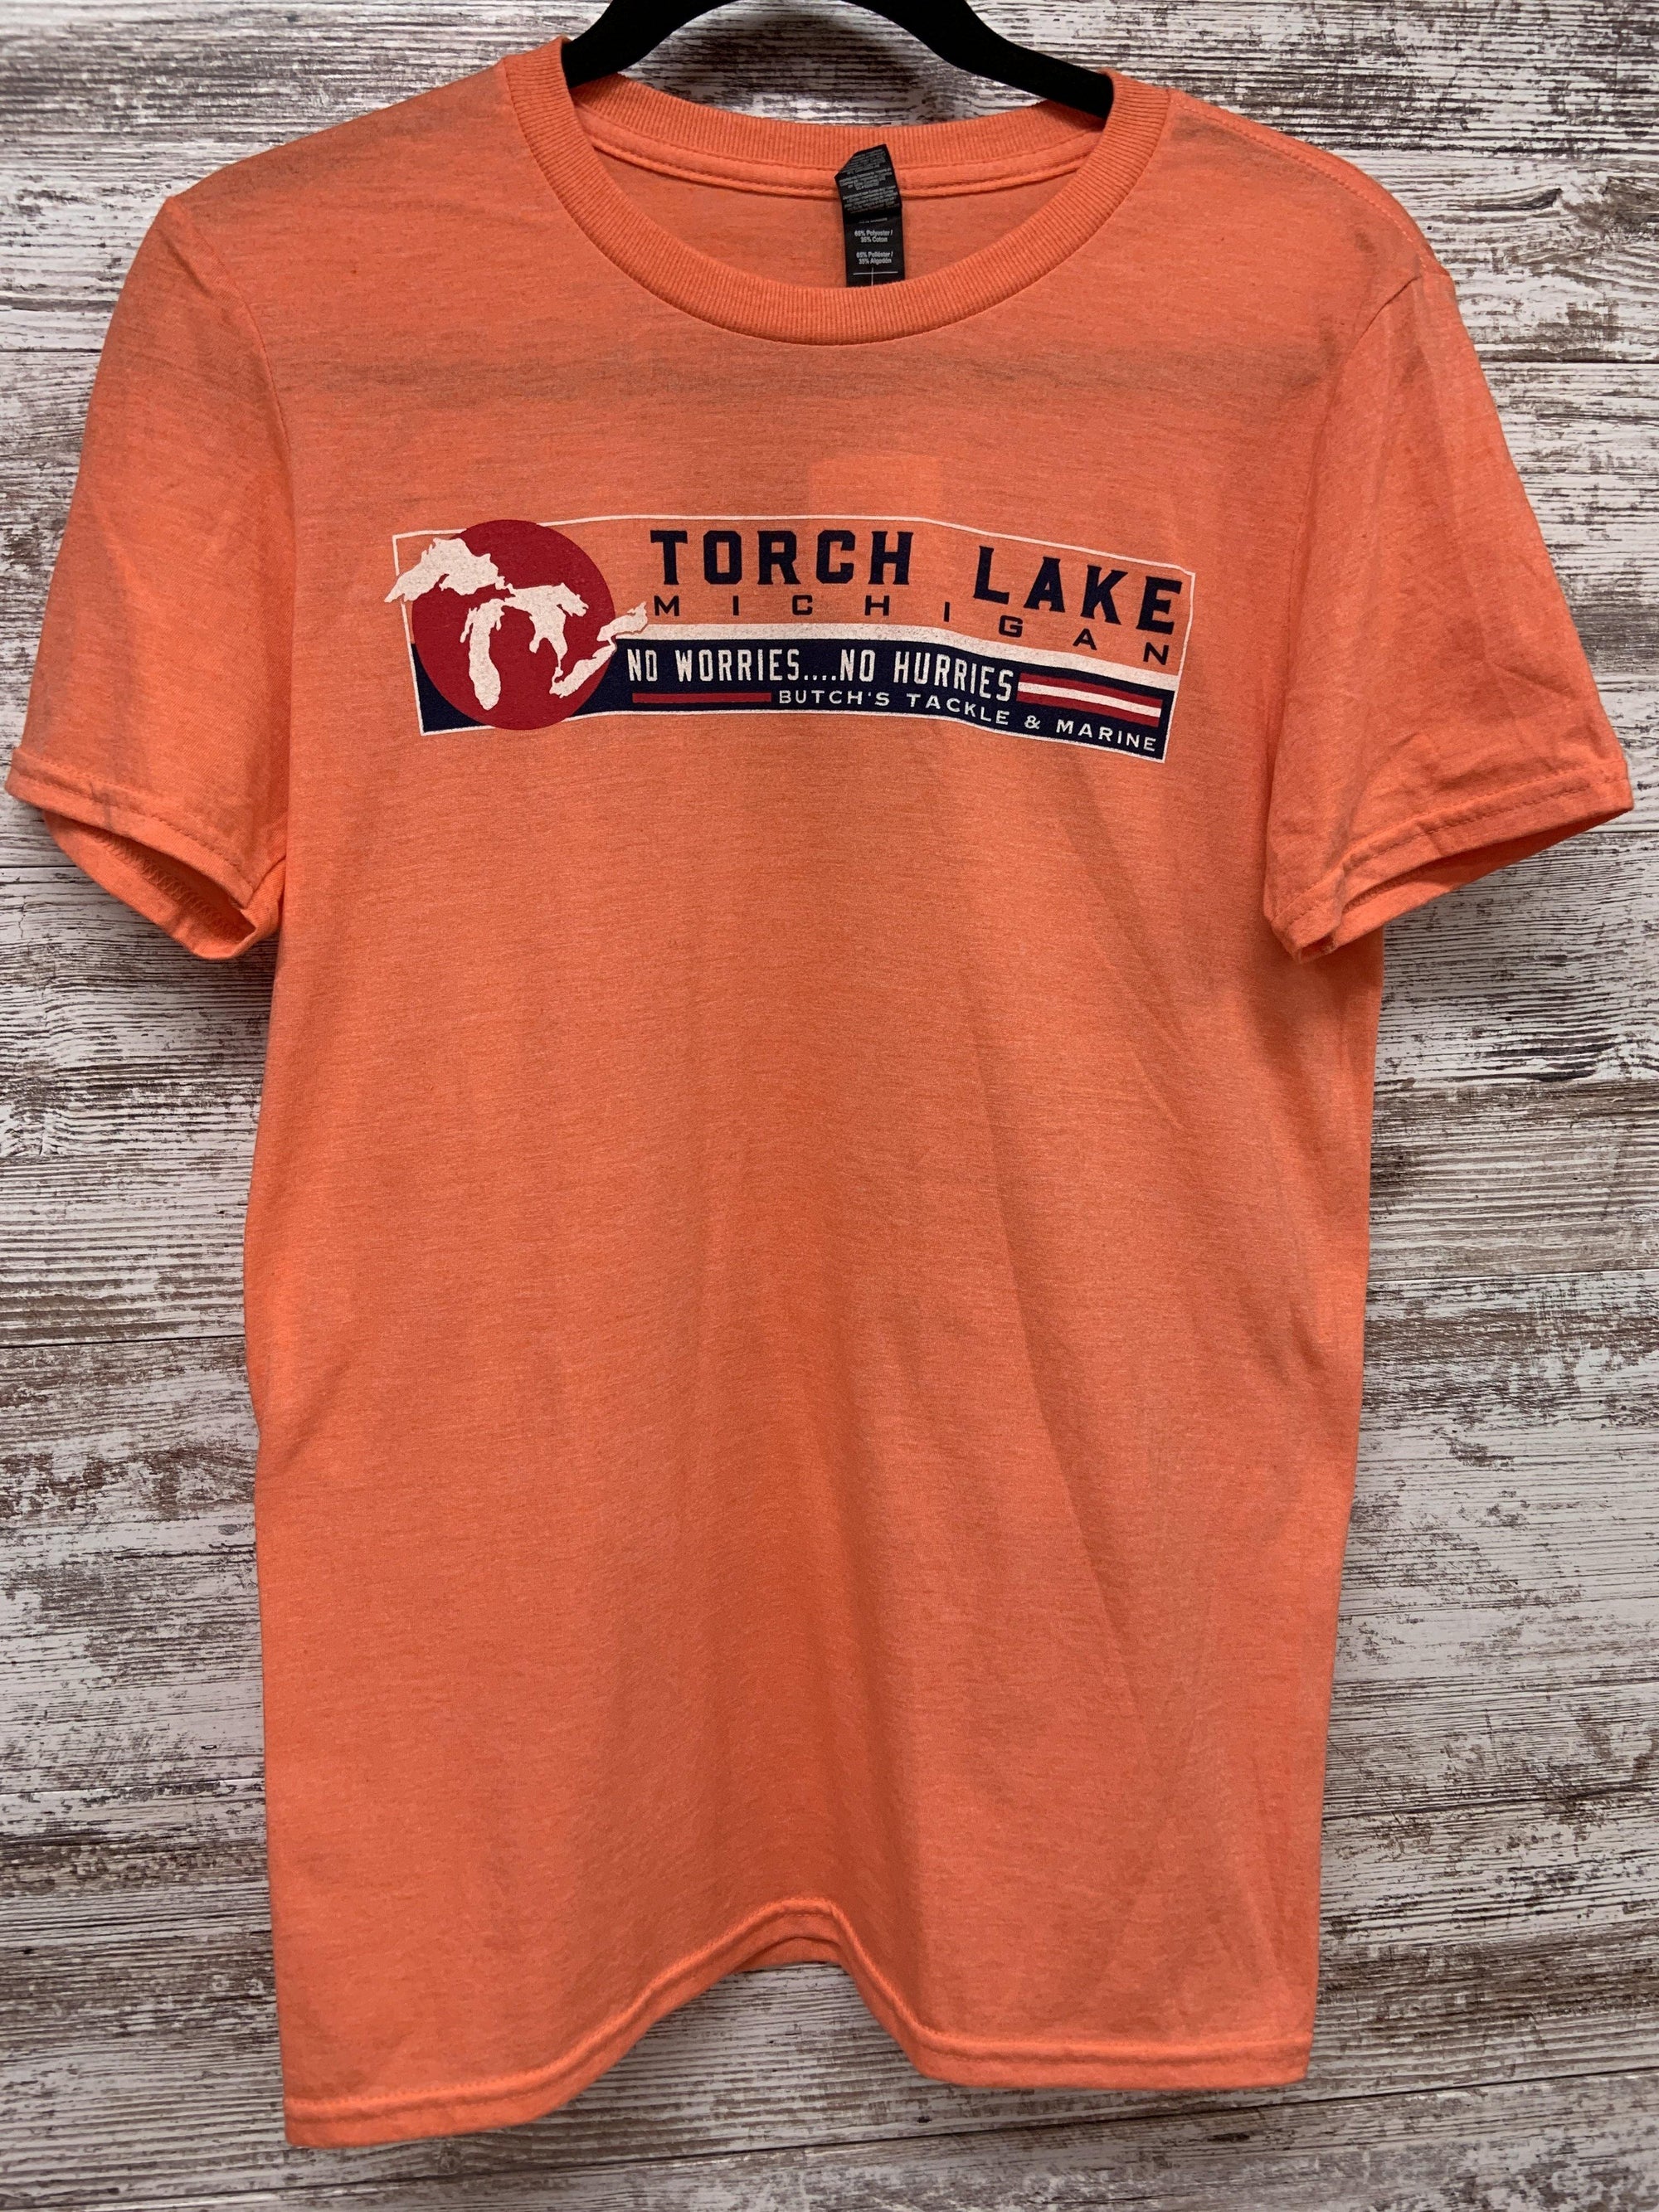 No Worries No Hurries Tshirt - Butch's Tackle & Marine - Pontoon Rentals on Torch Lake